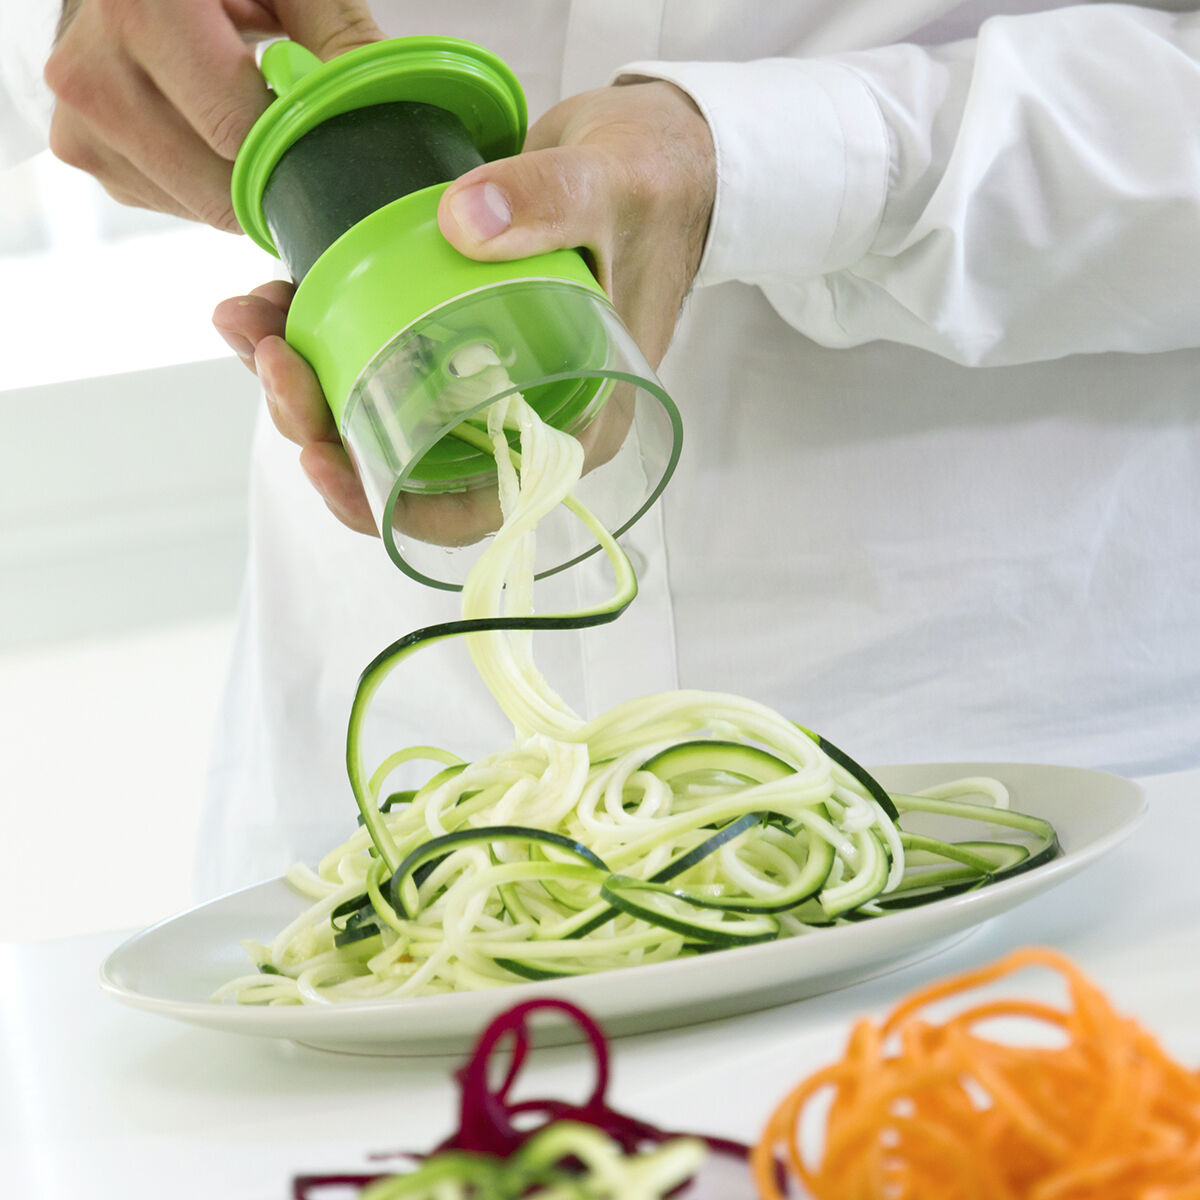 Coupe-Légumes en Spirale Mini Spiralicer InnovaGoods